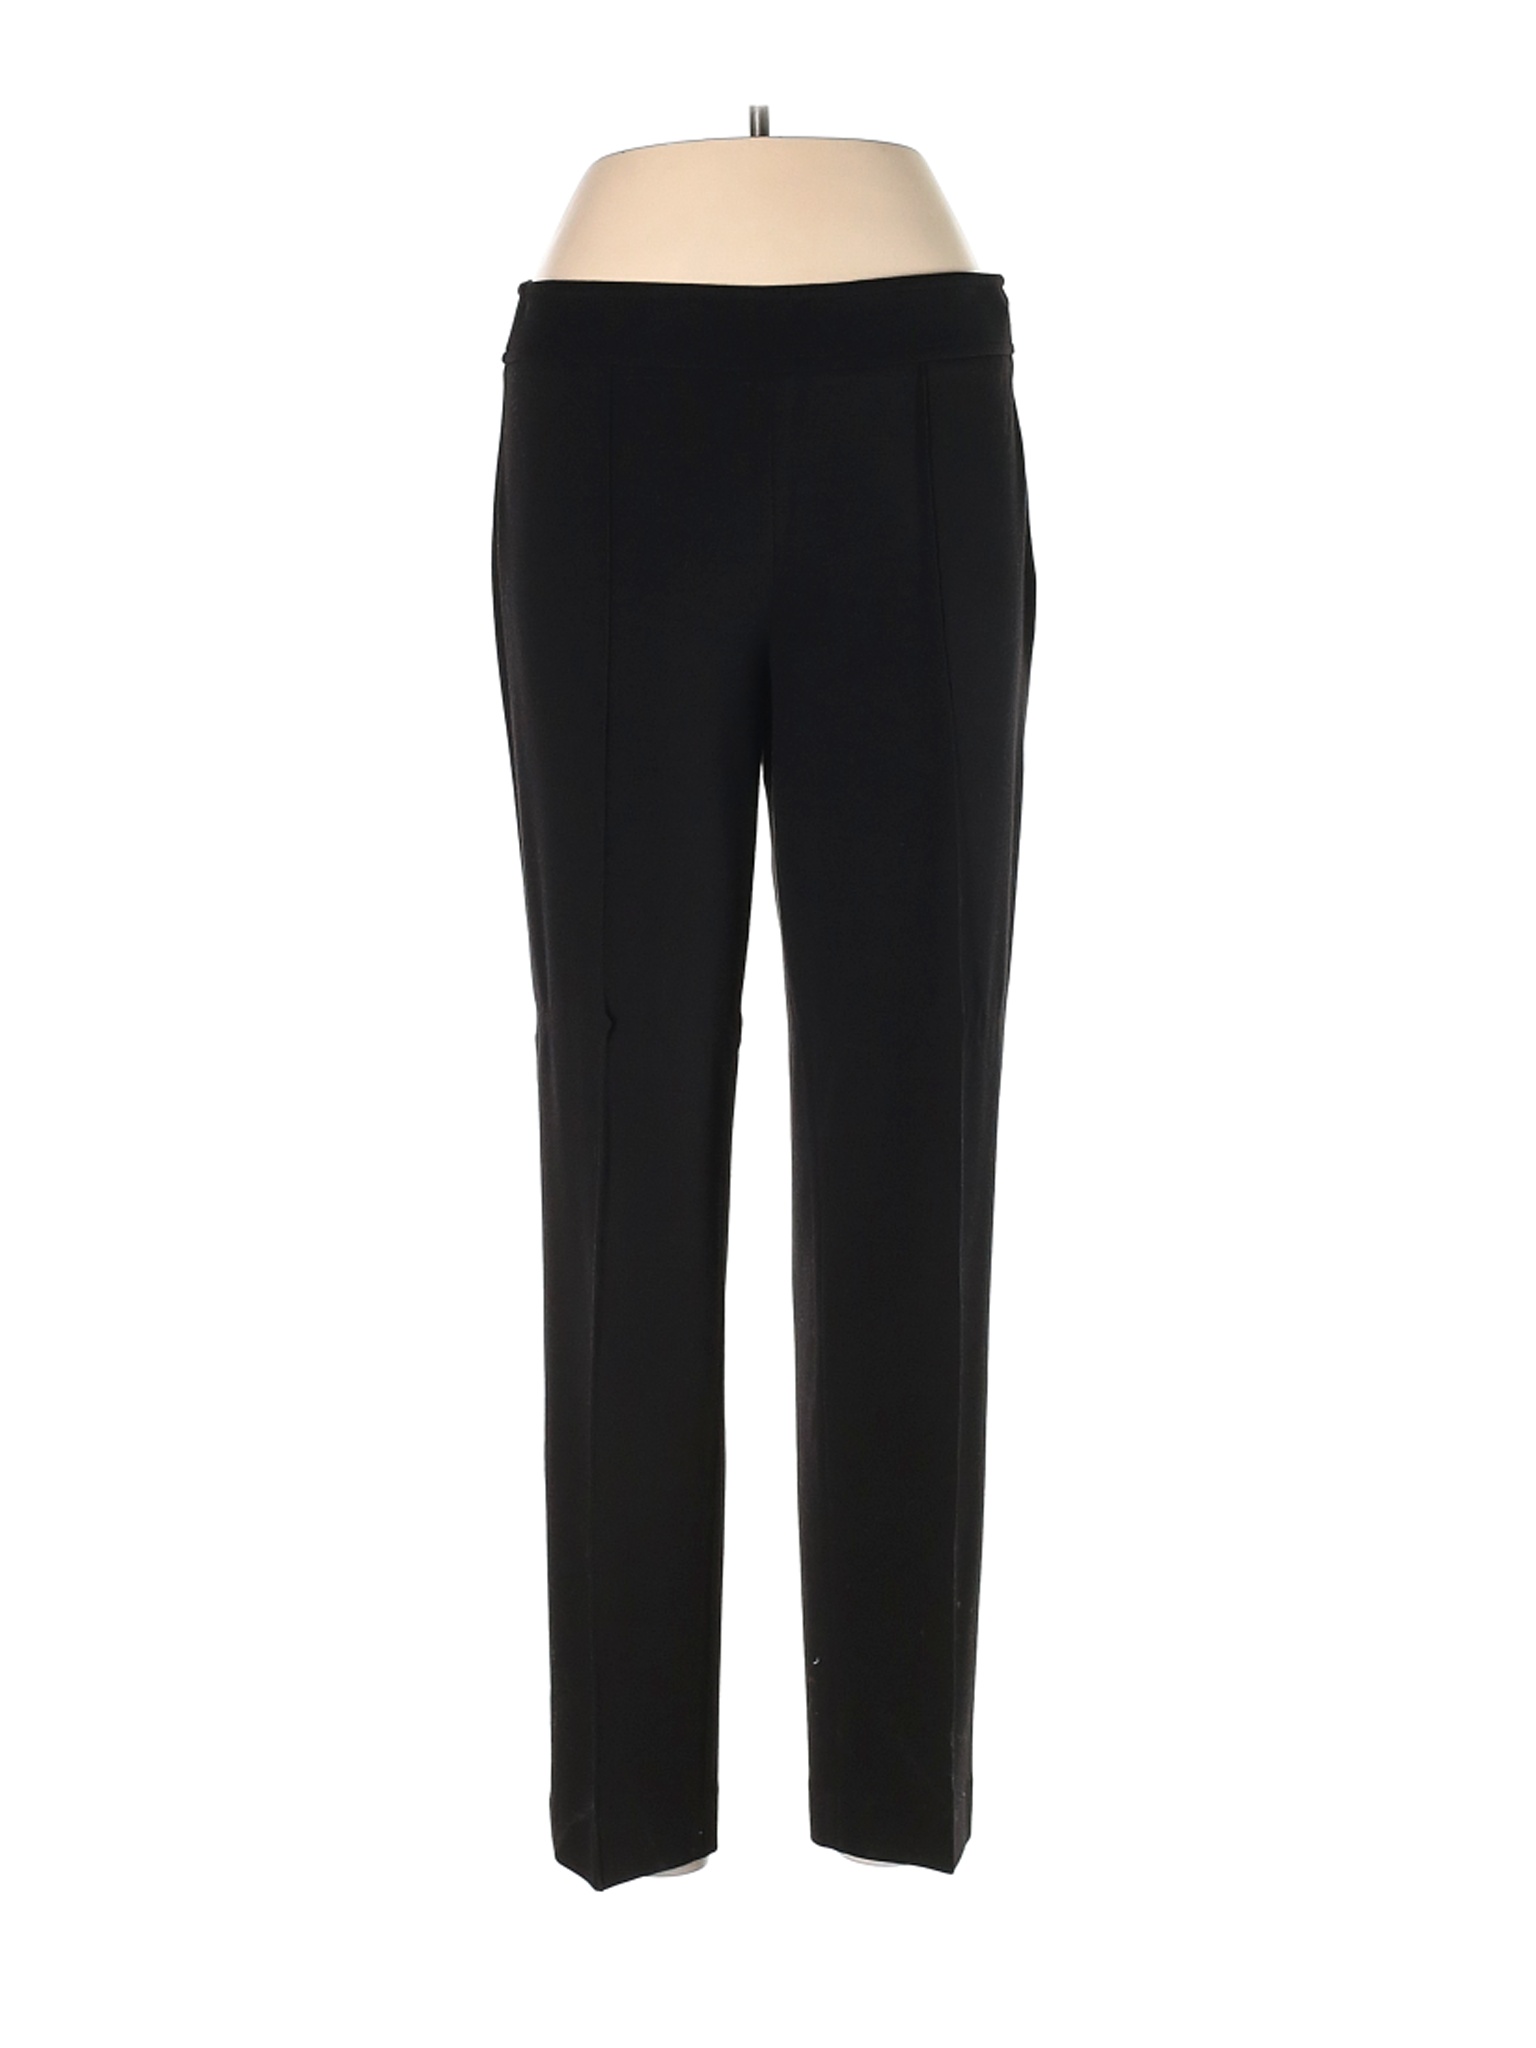 Talbots Women Black Casual Pants 6 | eBay